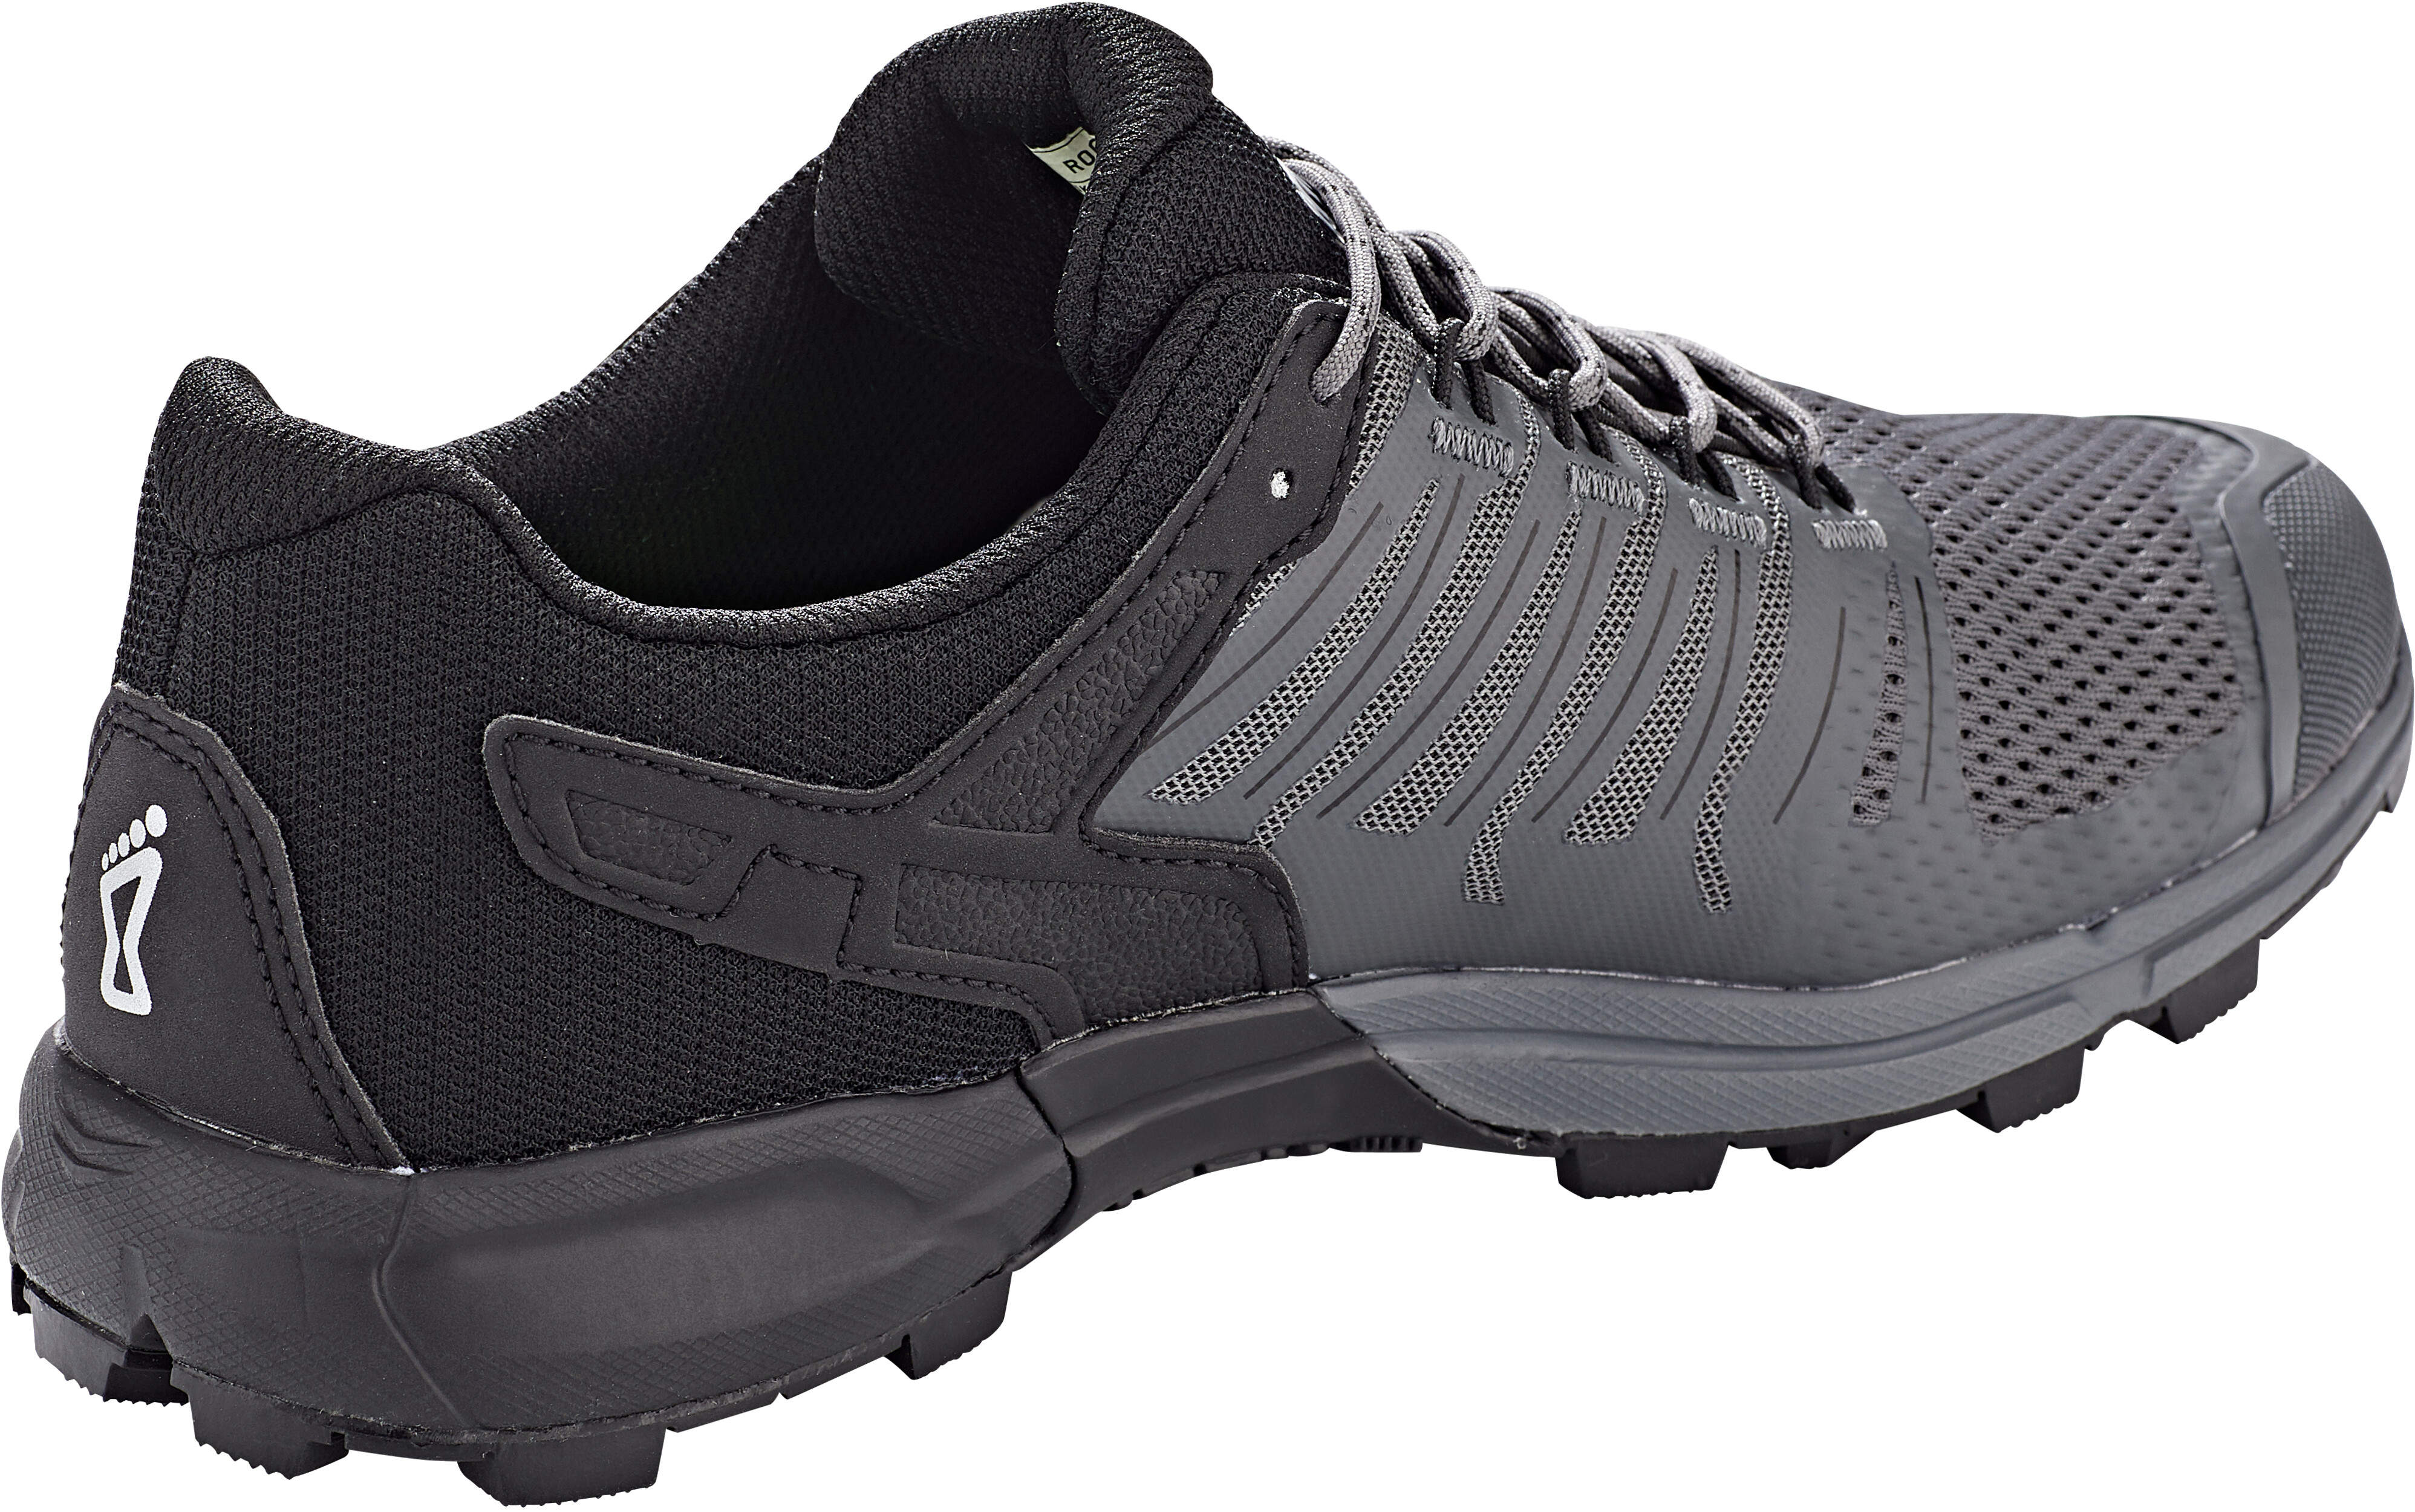 inov-8 RocLite G 275 Shoes Men grey/black | Addnature.co.uk